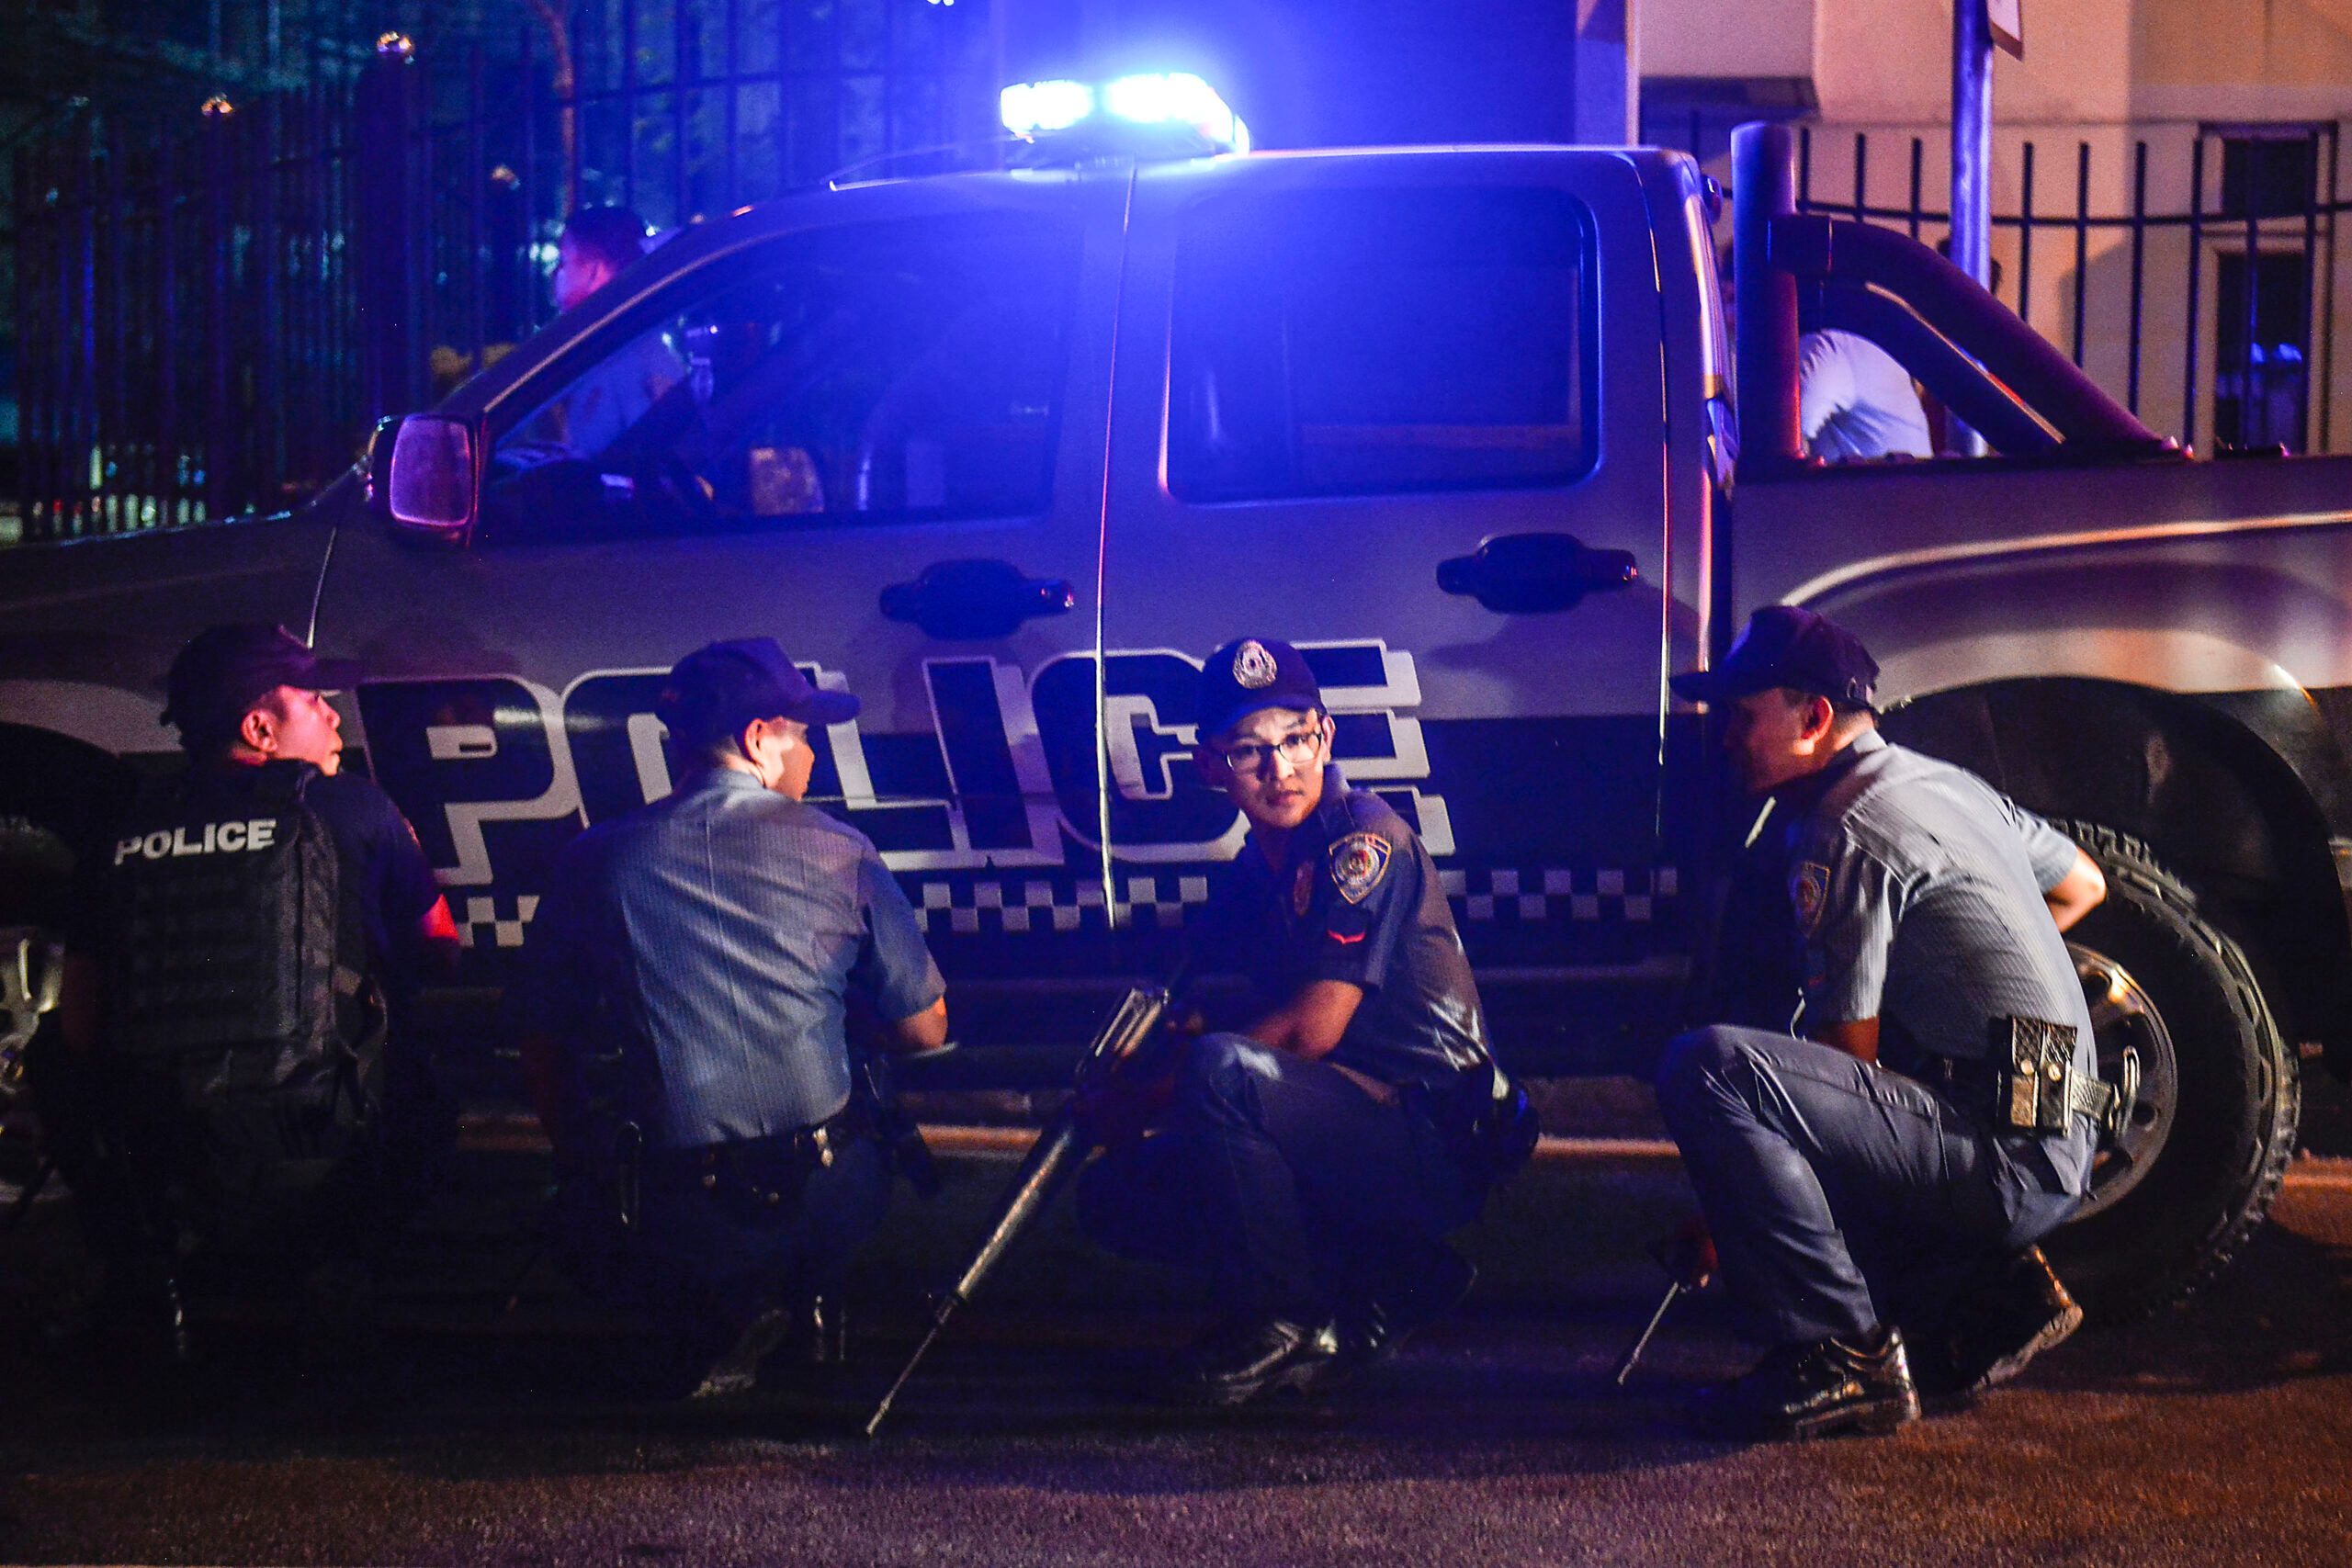 Gunman dead after Resorts World Manila shooting – police